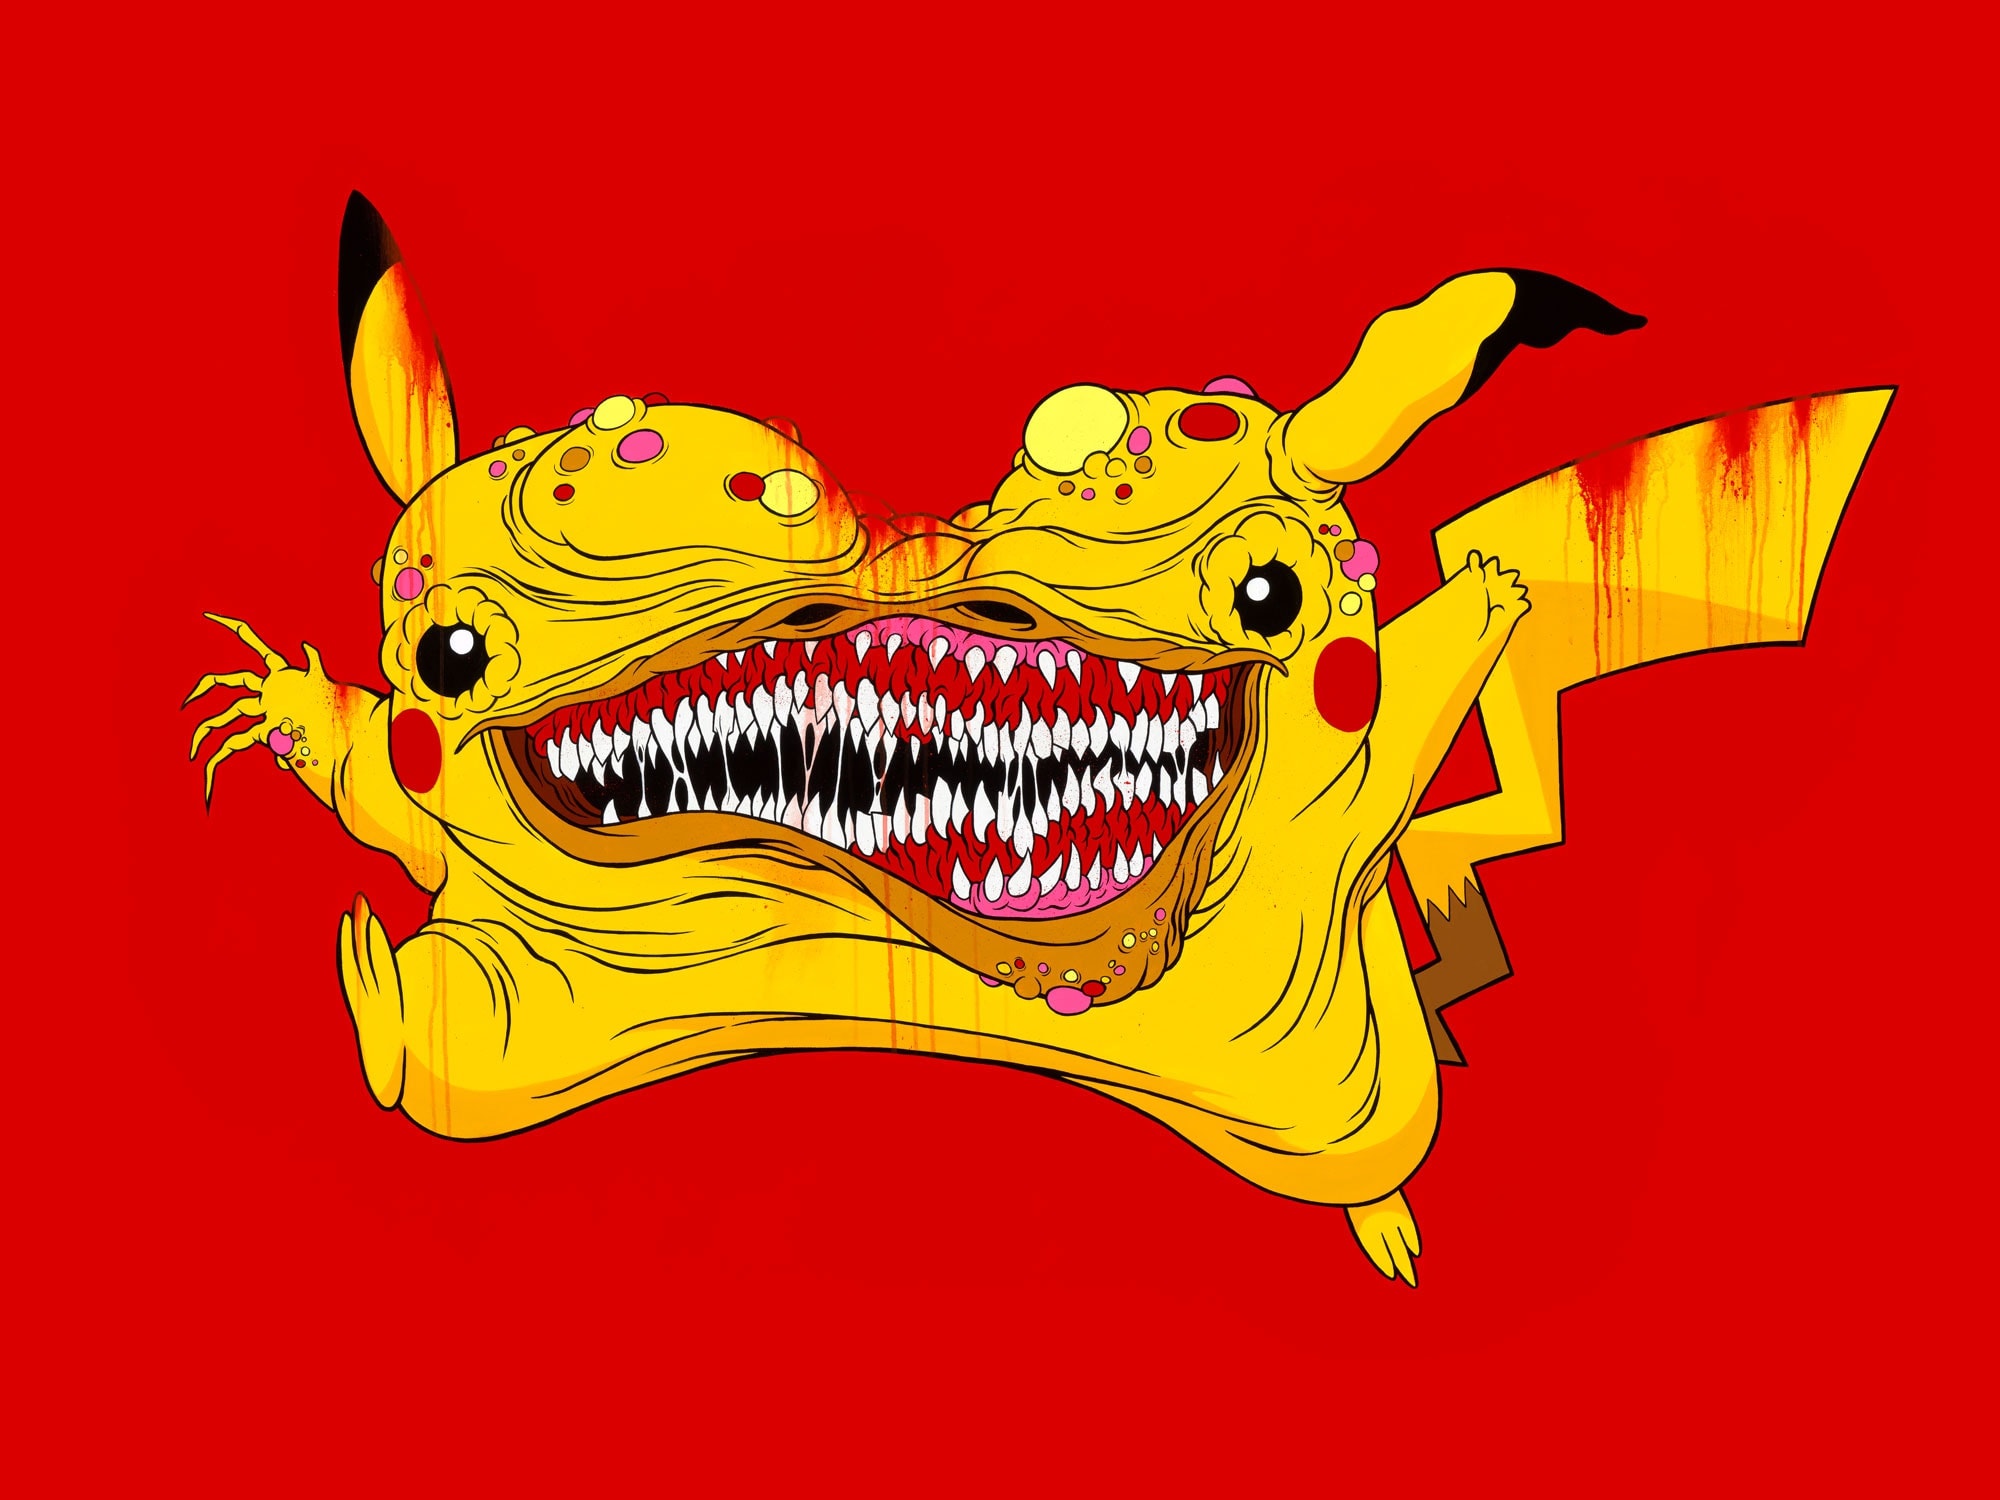 Illustration of Pikachu by Alex Pardee